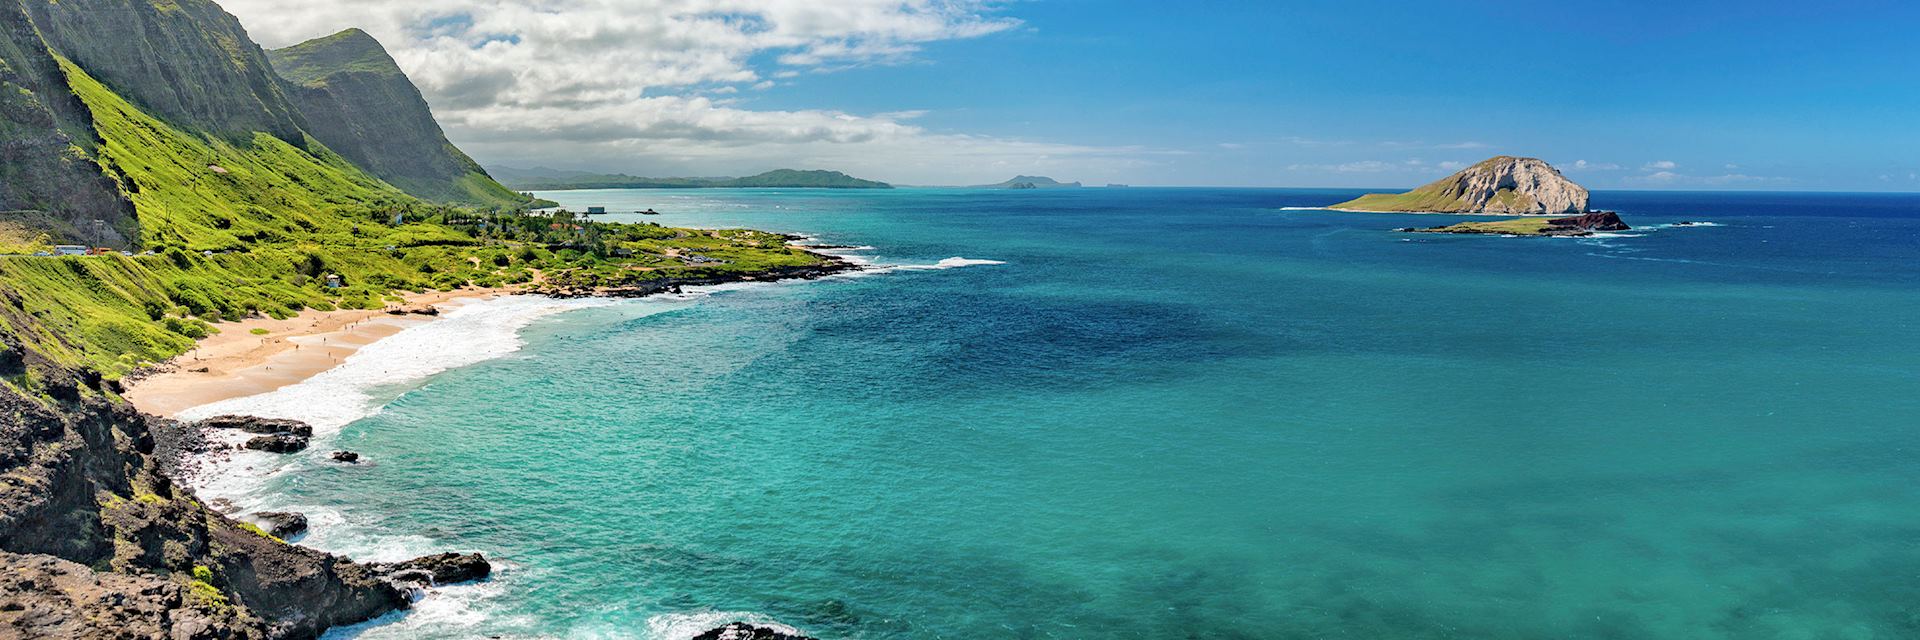 Lānaʻi coastline, Hawaii